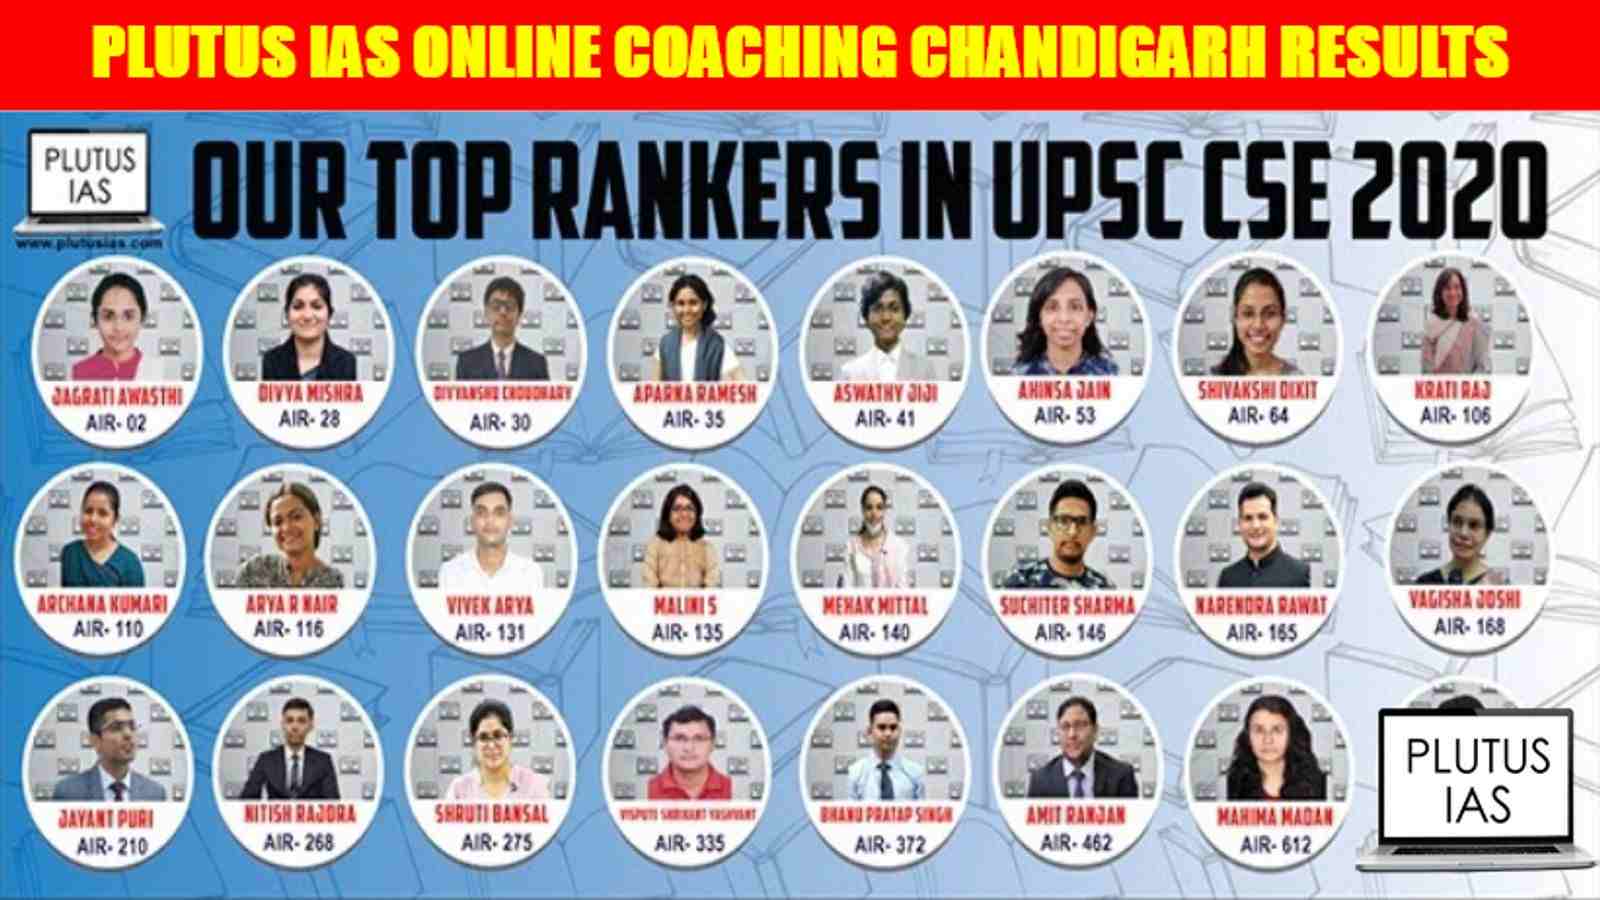 Plutus IAS Online Coaching Chandigarh Results